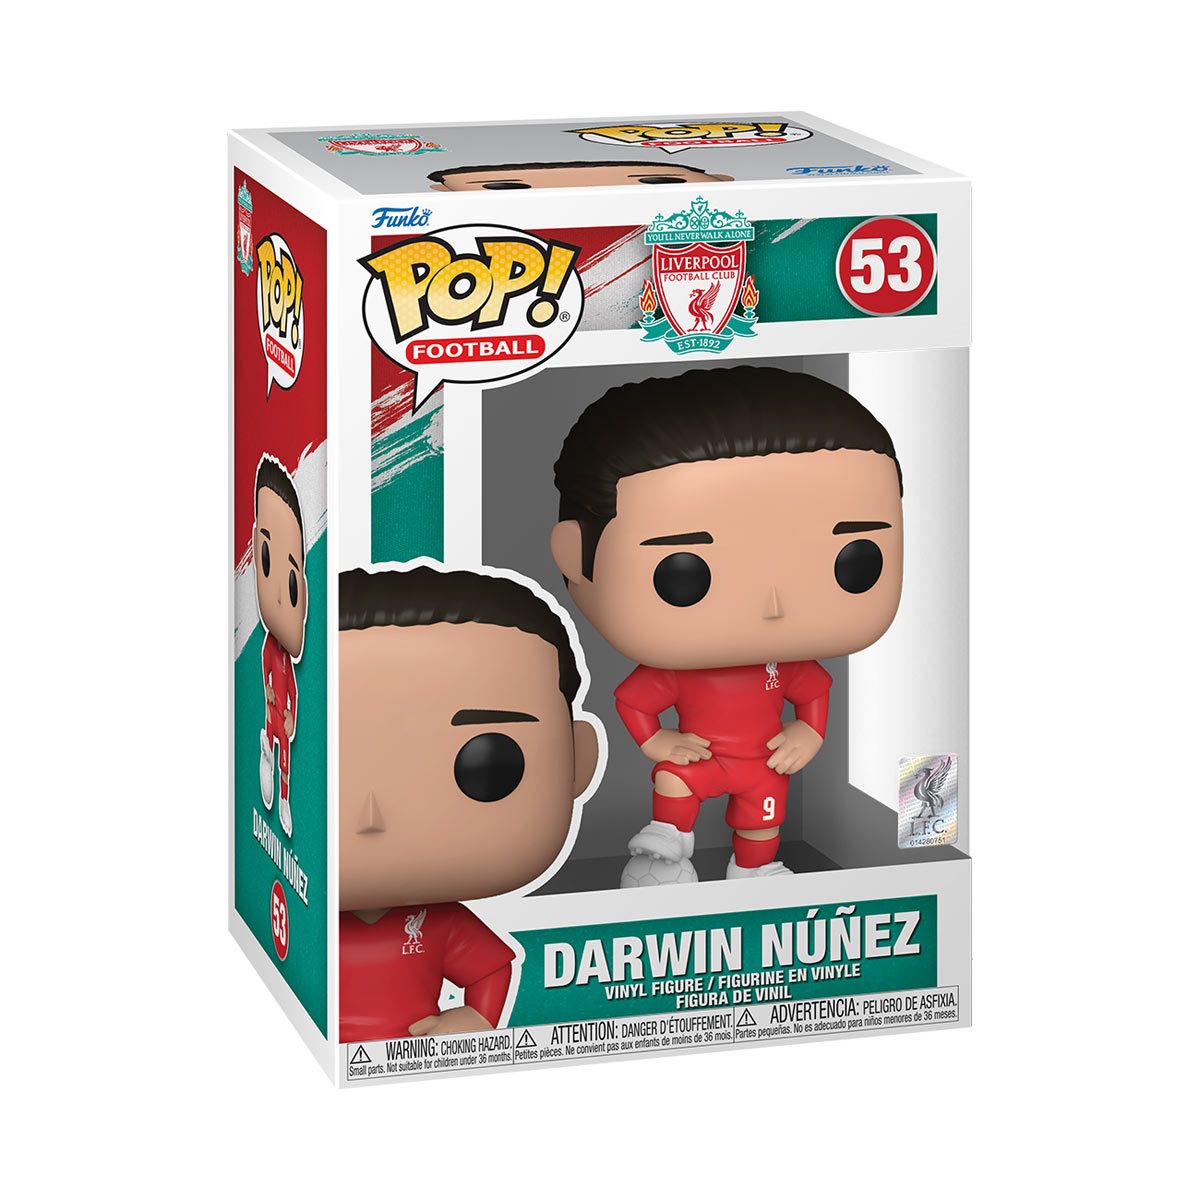 Funko Pop Football: Liverpool - Darwin Nunez